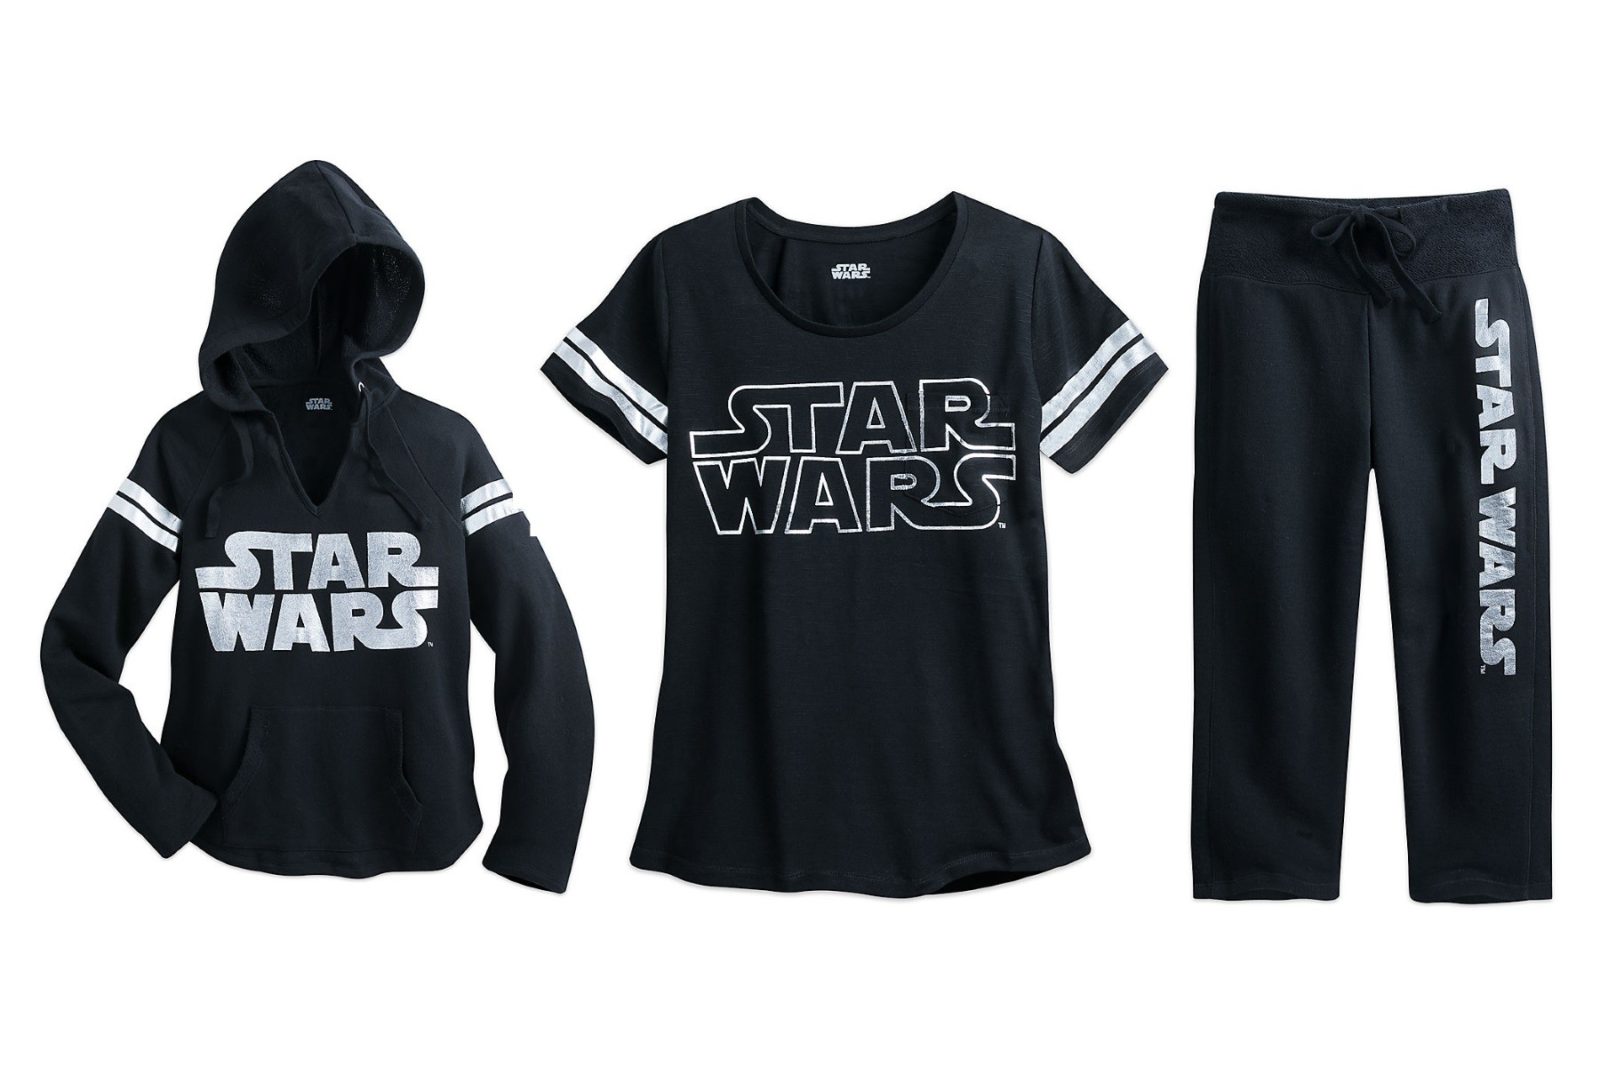 New women’s Star Wars logo apparel range